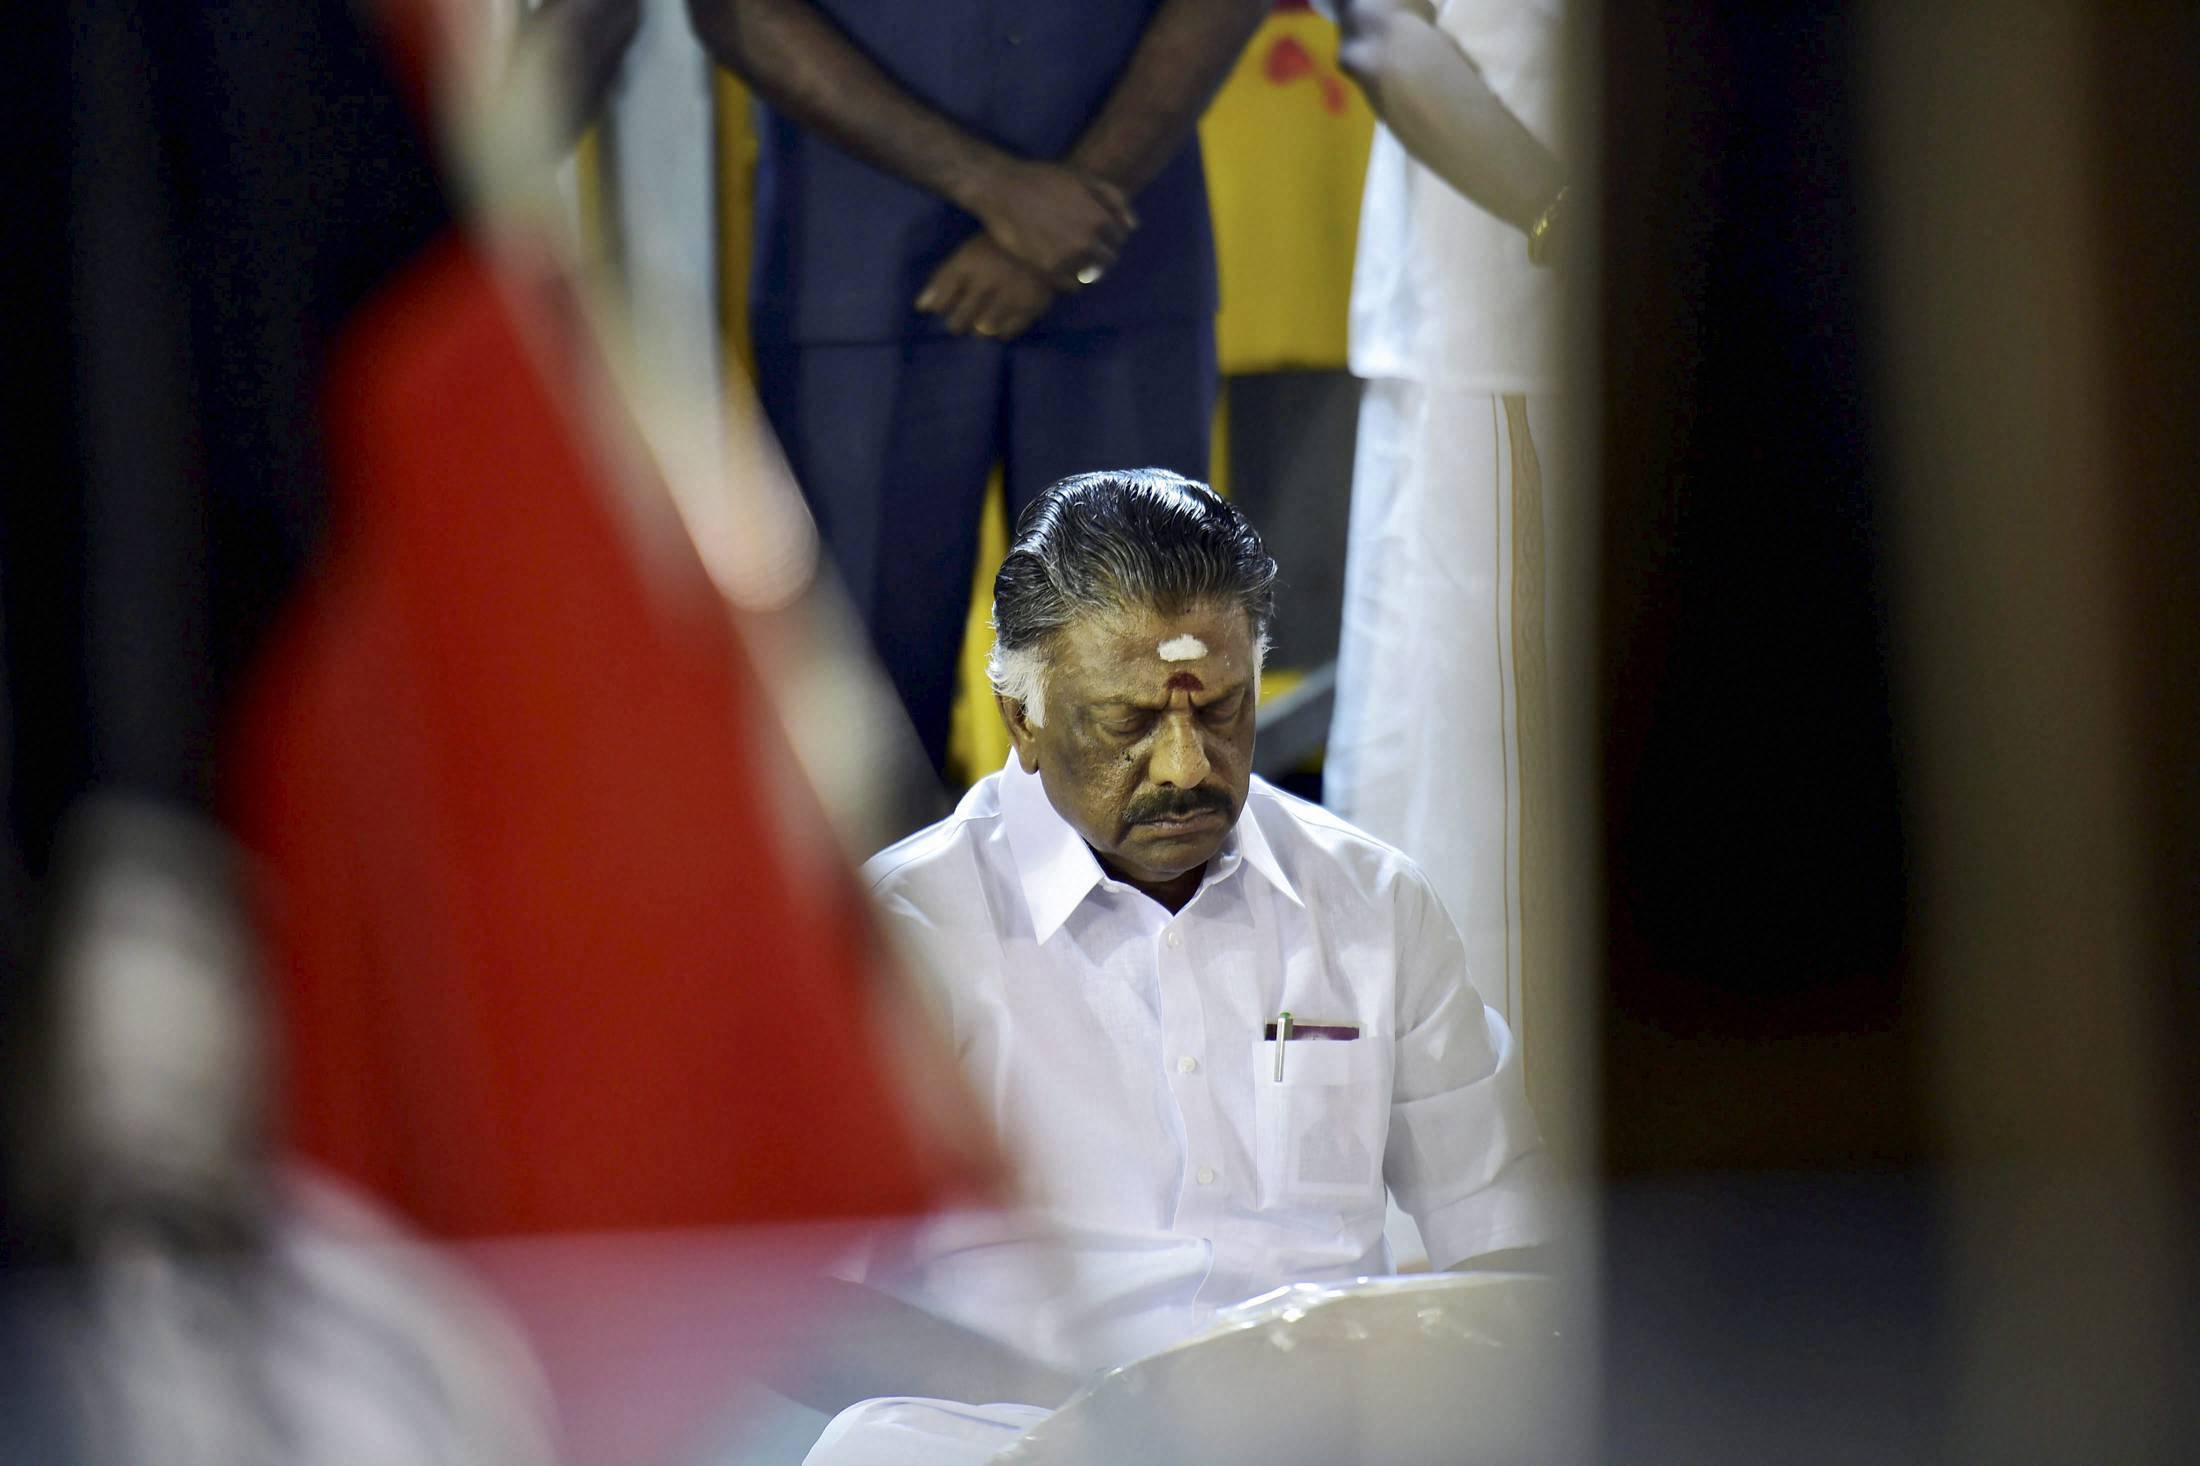 Panneerselvam sits alone in meditation at Jaya's burial site